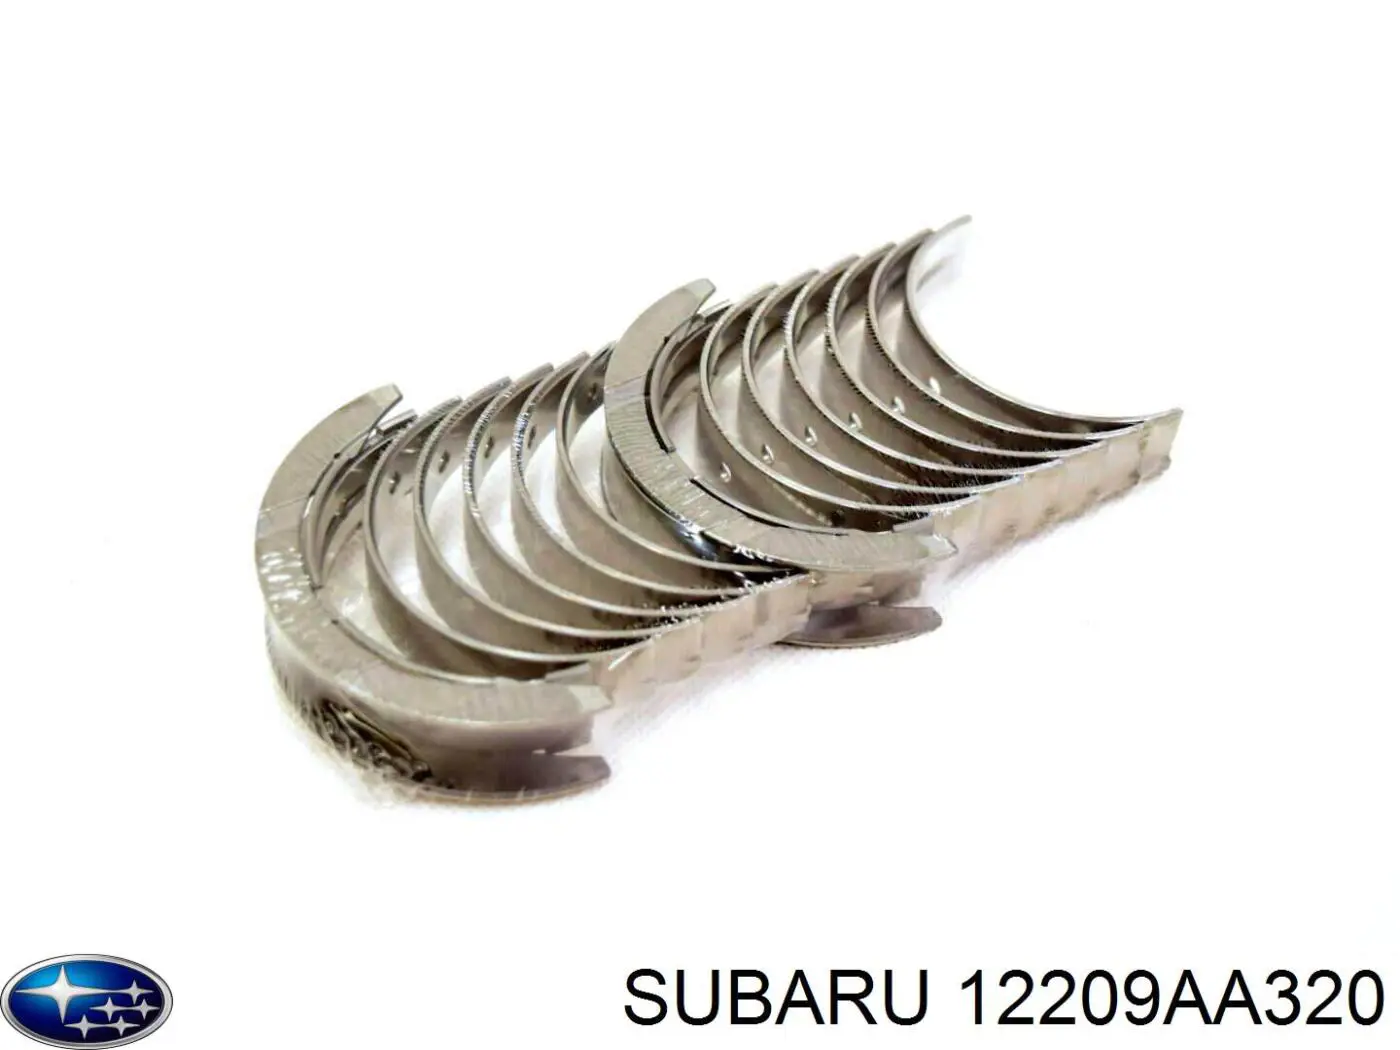 Вкладыши коленвала коренные, комплект, стандарт (STD) Subaru 12209AA320